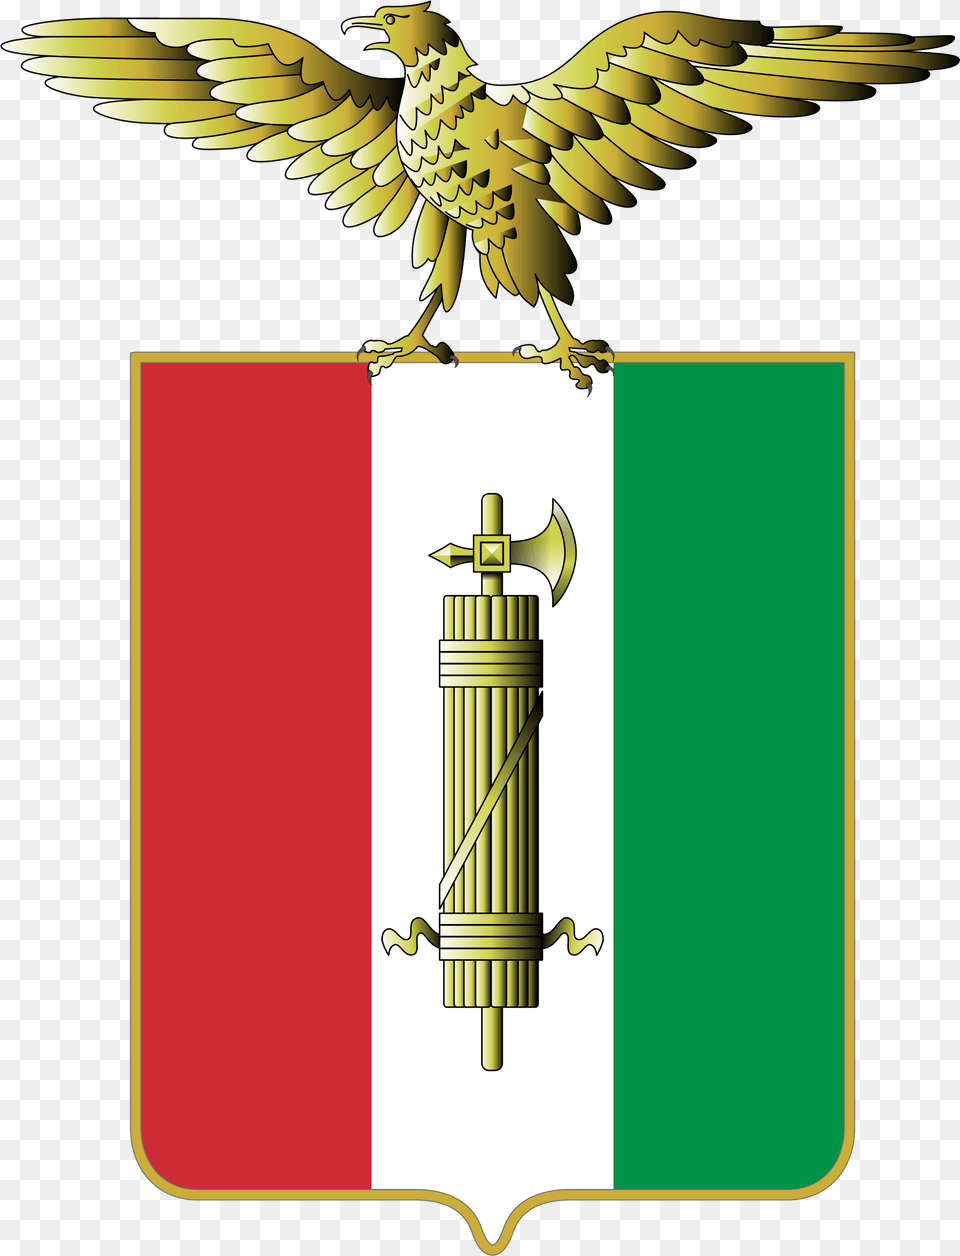 Nazi Salute Arm Italian Army Coat Of Arms, Animal, Bird, Smoke Pipe Png